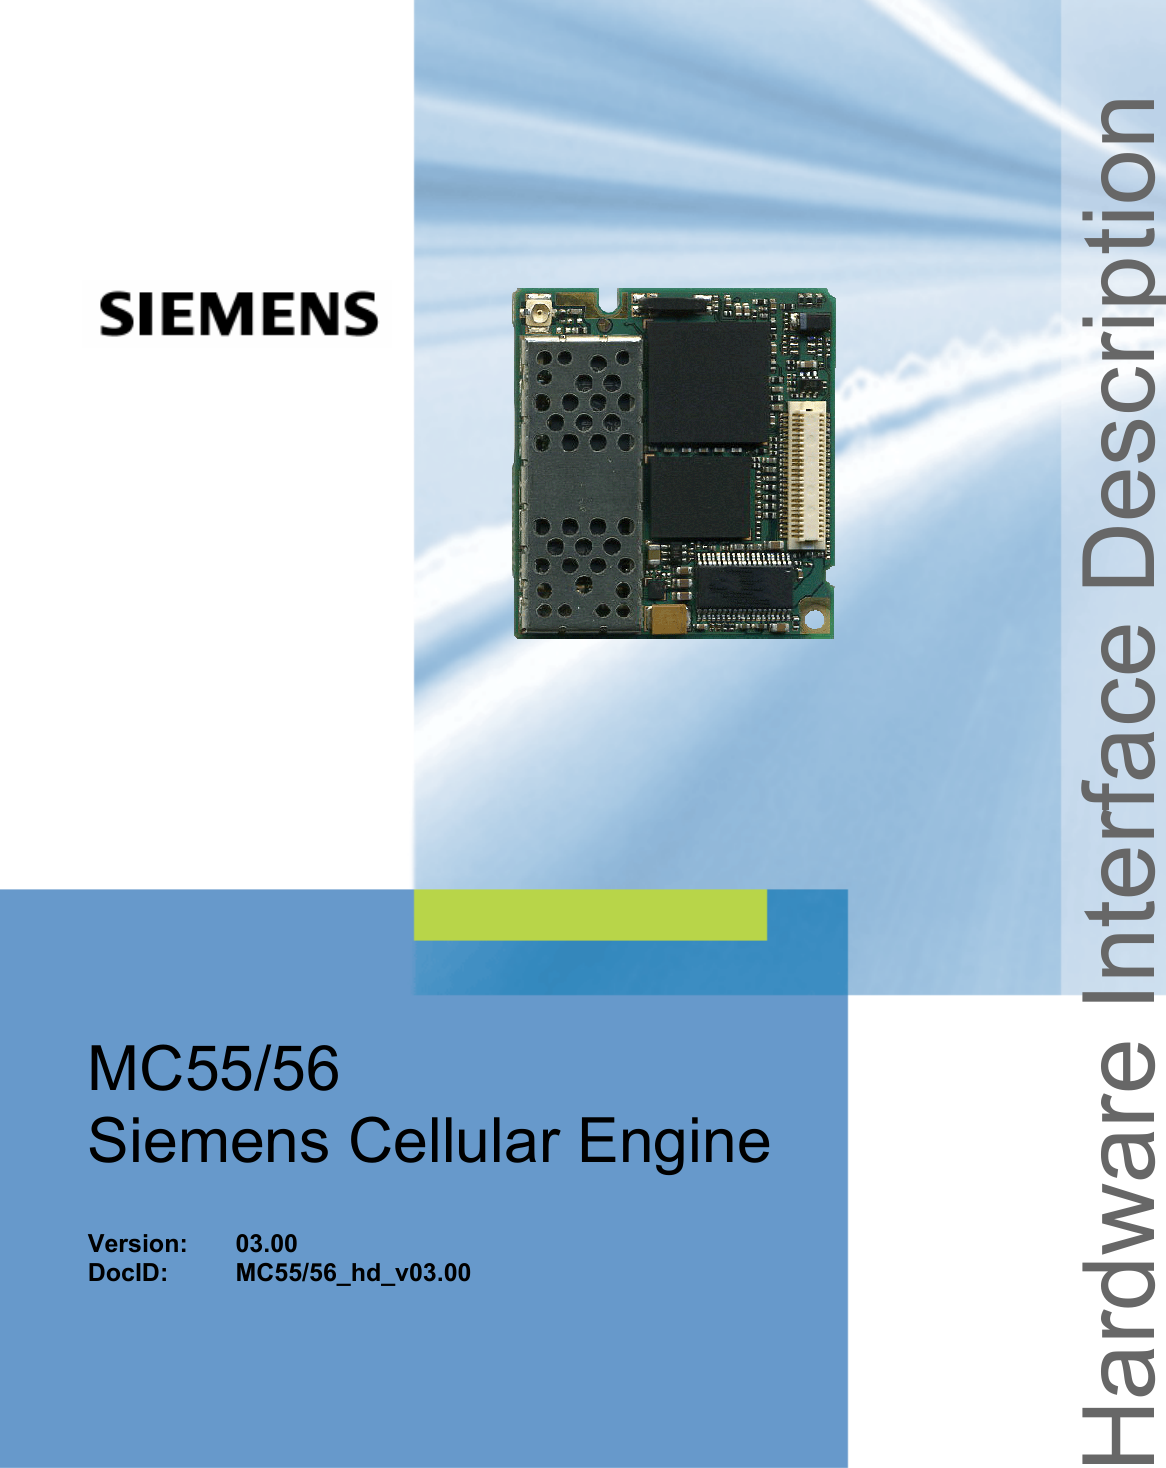 MC55/56 Hardware Interface Description Confidential / Preliminary s MC55/56_hd_v03.00  Page 1 of 104  16.08.2005  Hardware Interface Description MC55/56 Siemens Cellular Engine   Version: 03.00 DocID: MC55/56_hd_v03.00 